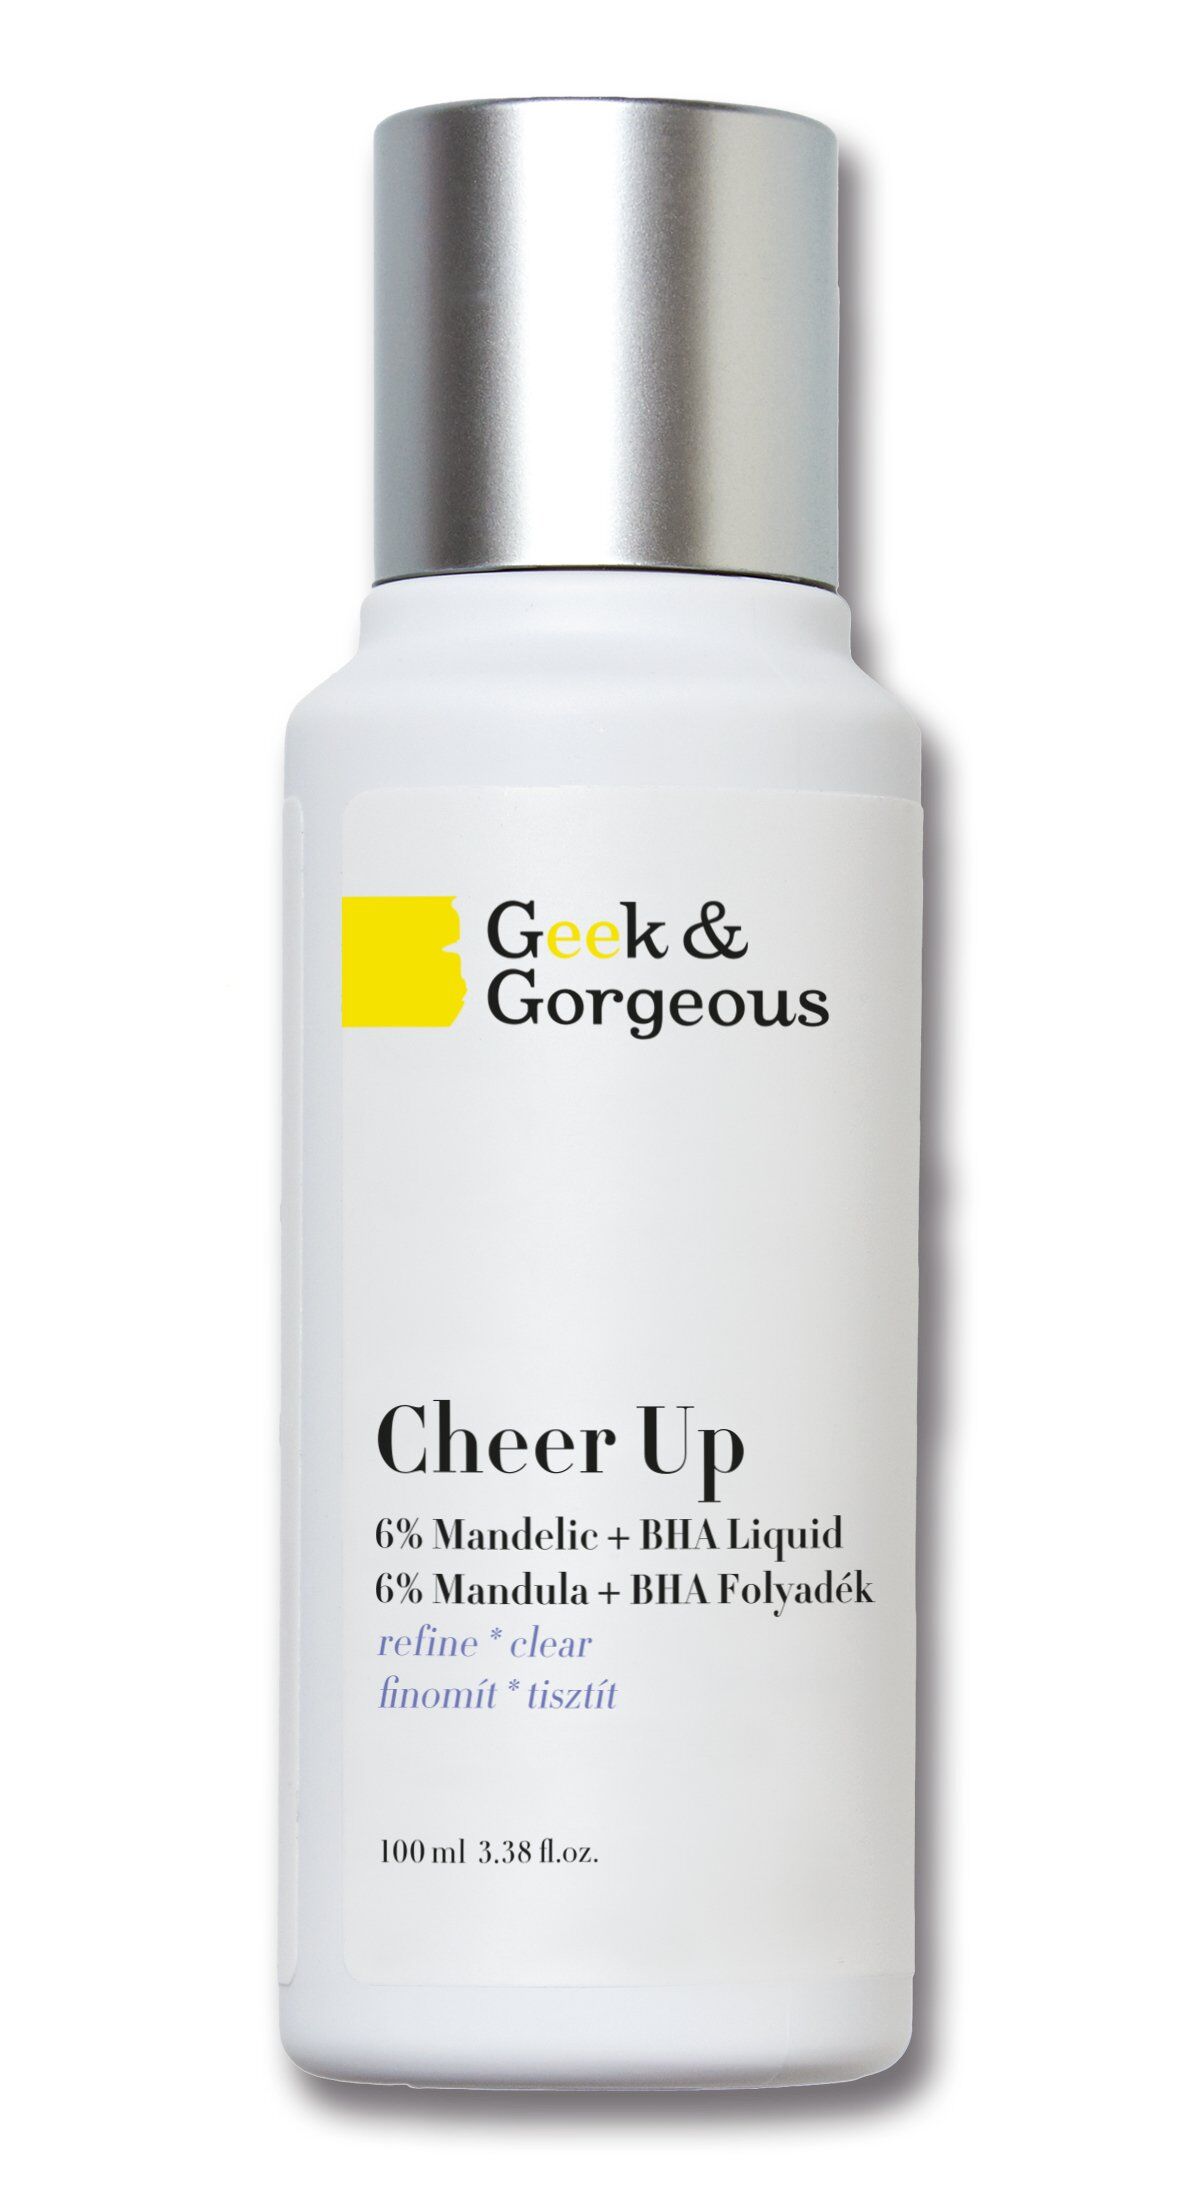 Geek & Gorgeous - Cheer up